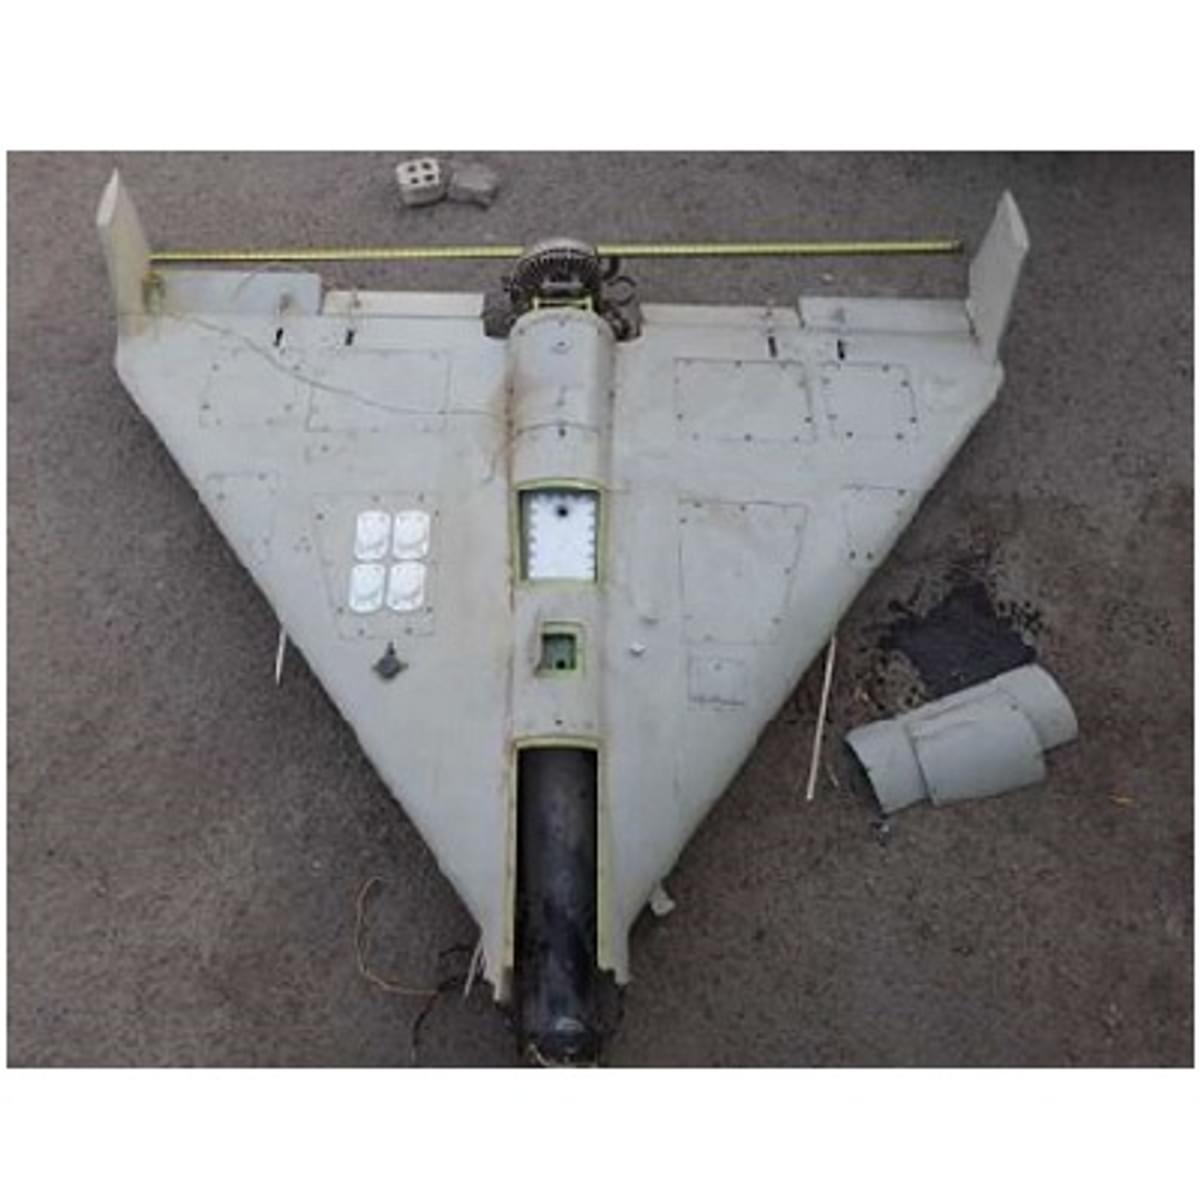 Iraanse kamikaze drones tjokvol met Westerse technologie image